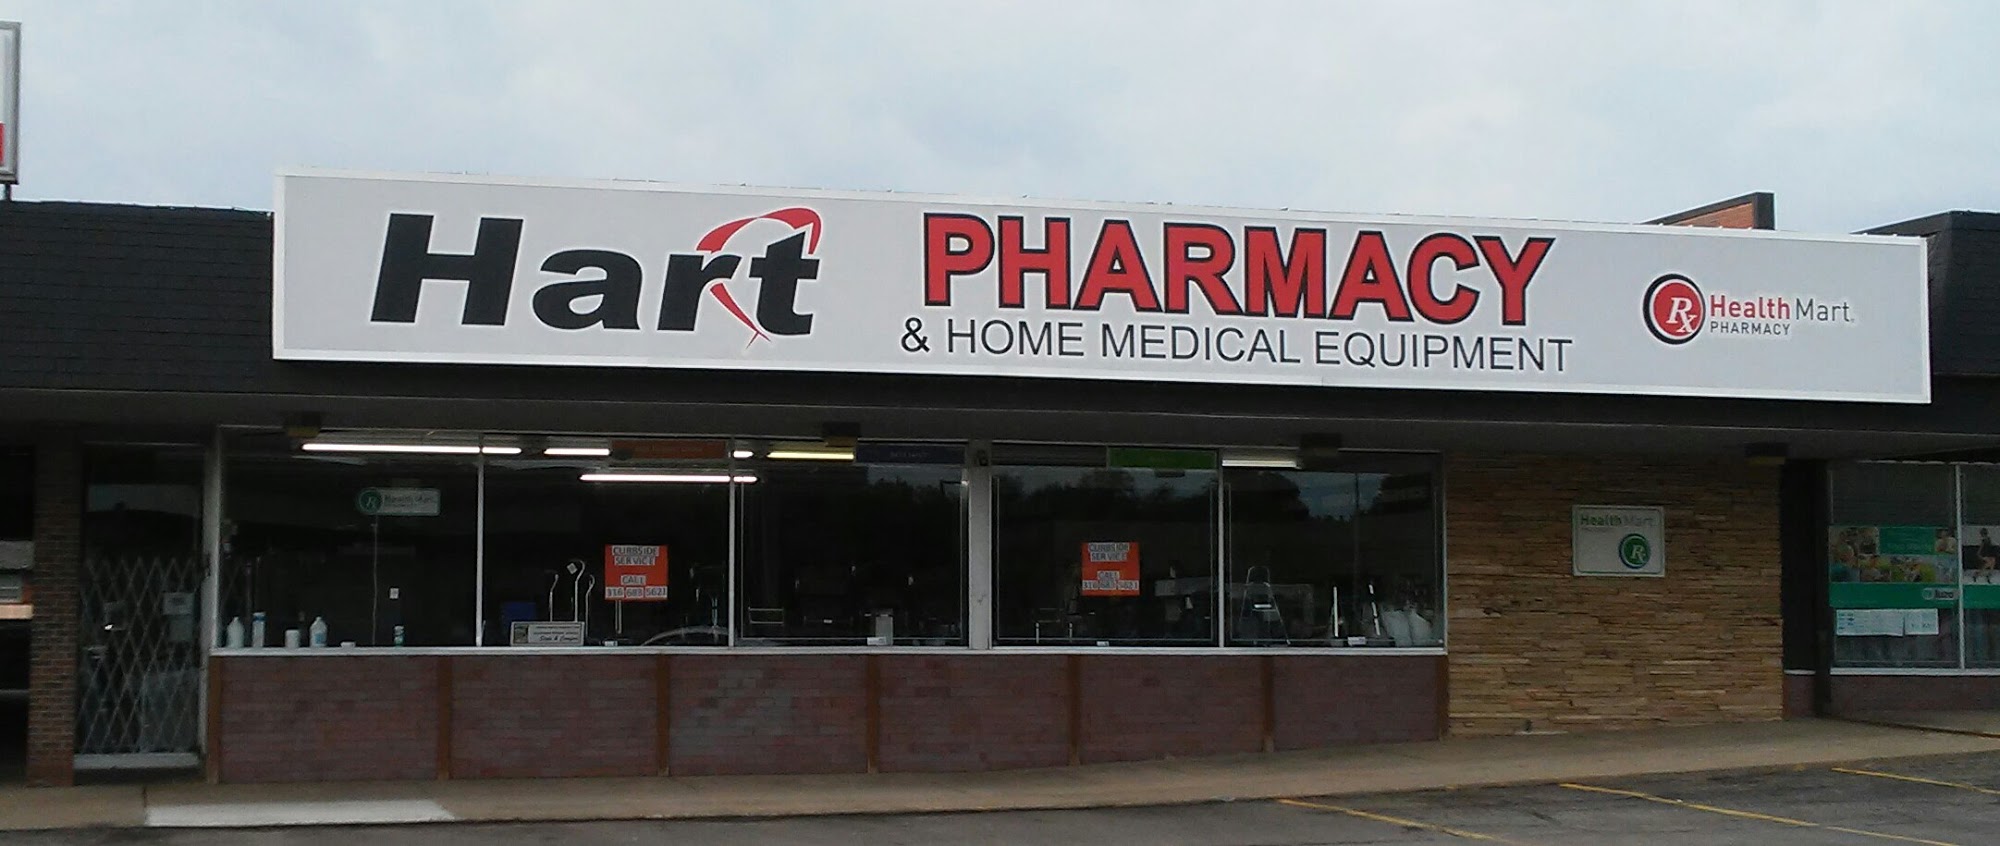 Hart Pharmacy